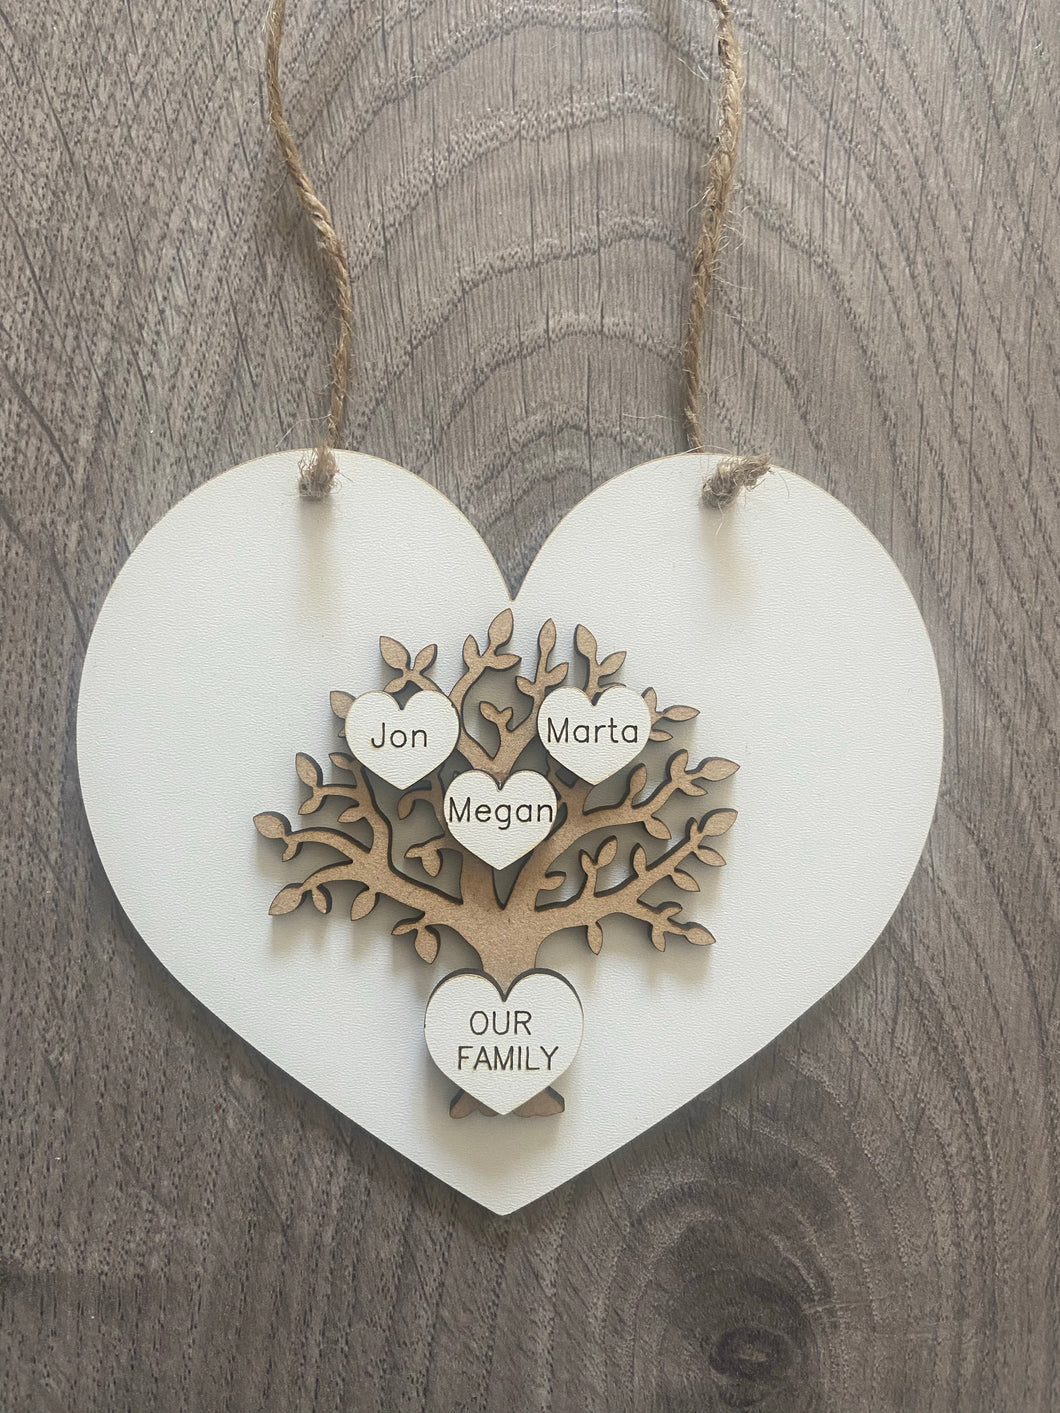 Wooden personalised heart shaped family tree plaque - Laser LLama Designs Ltd